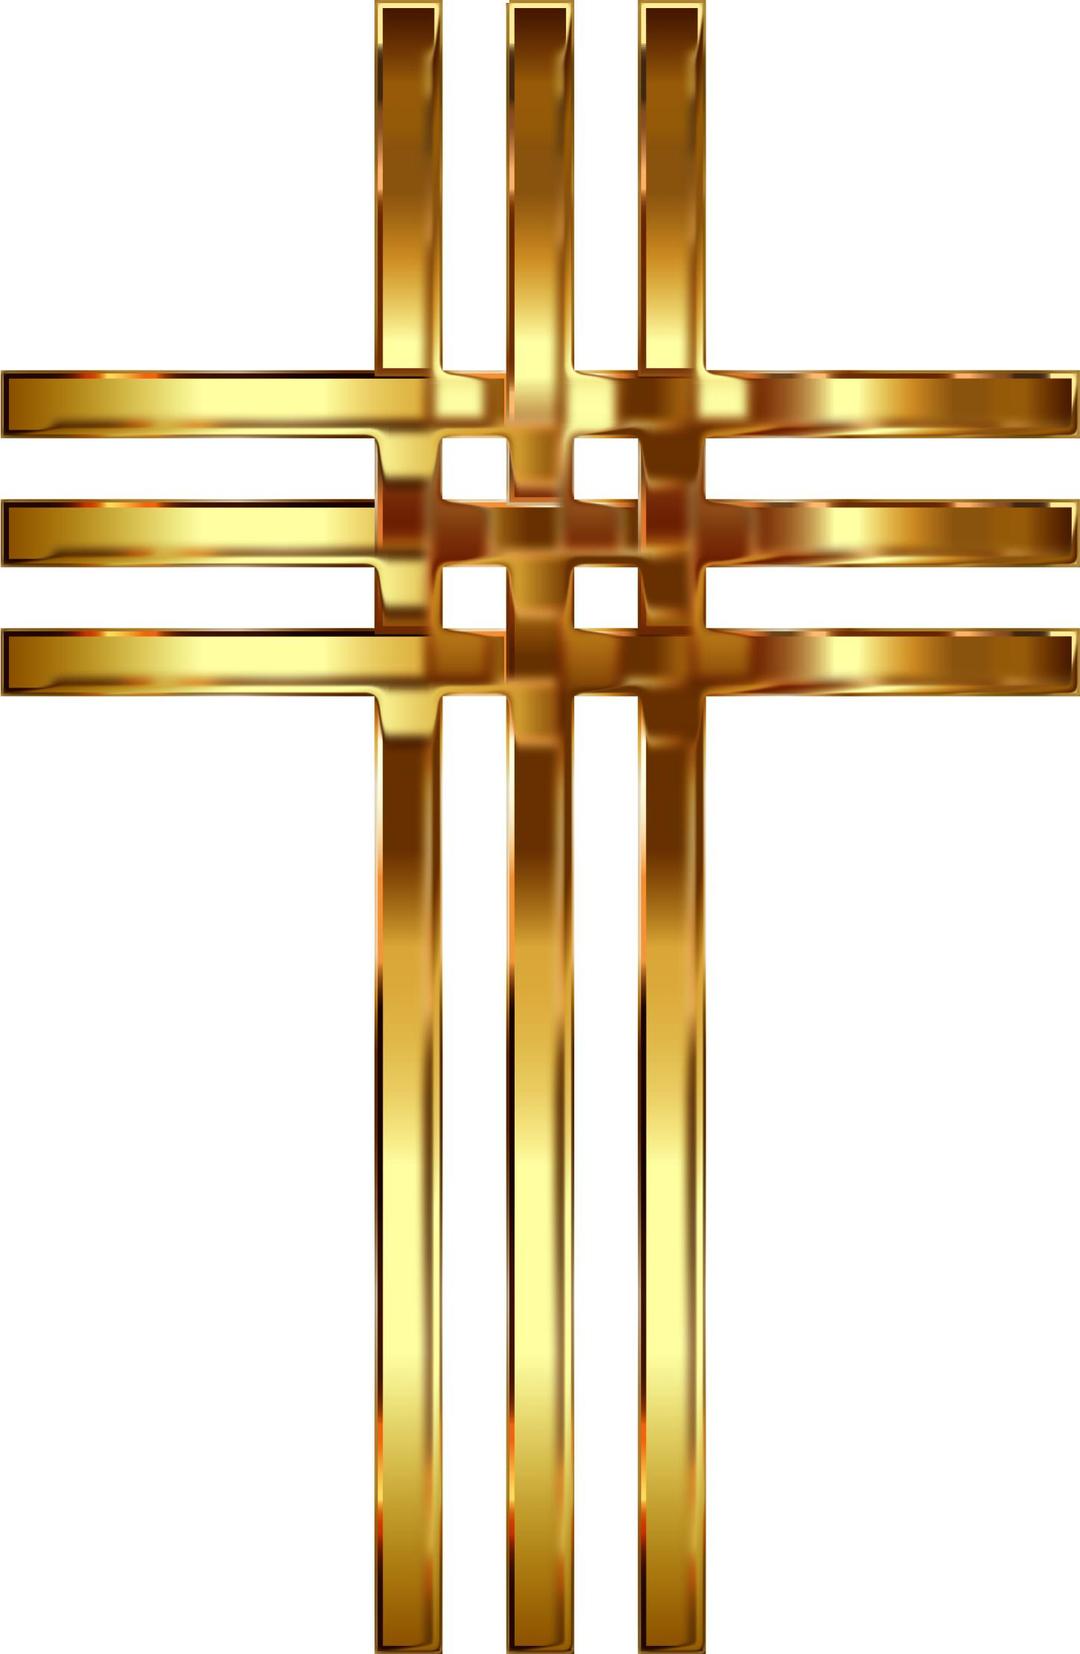 Interlocked Stylized Golden Cross Enhanced 2 No Background png transparent